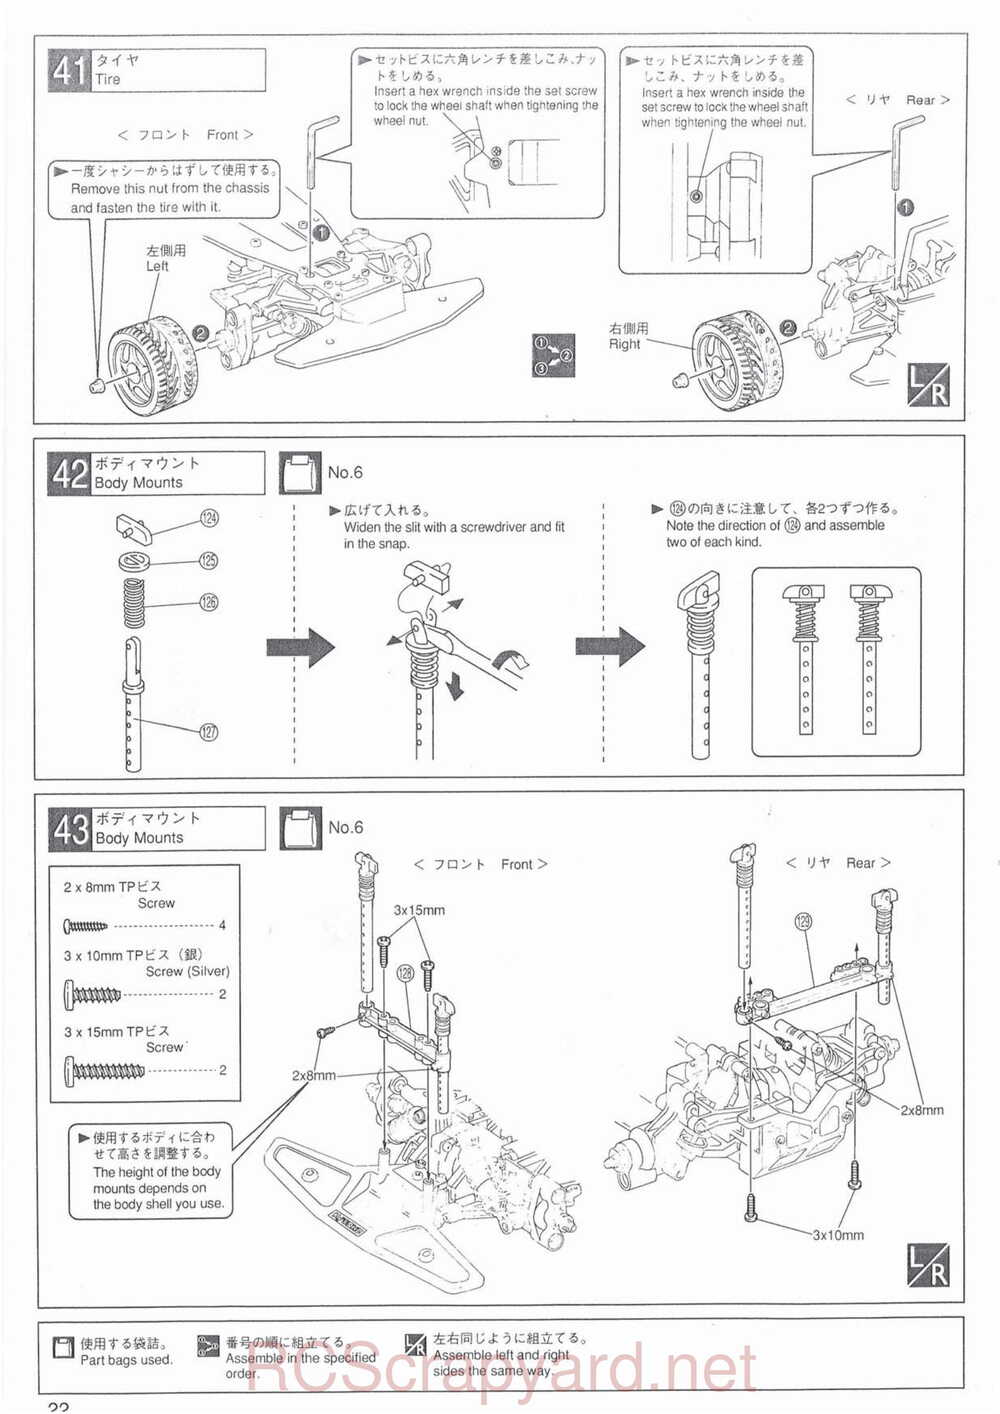 Kyosho - 31701 - Superten-Four FW-03 - Manual - Page 22